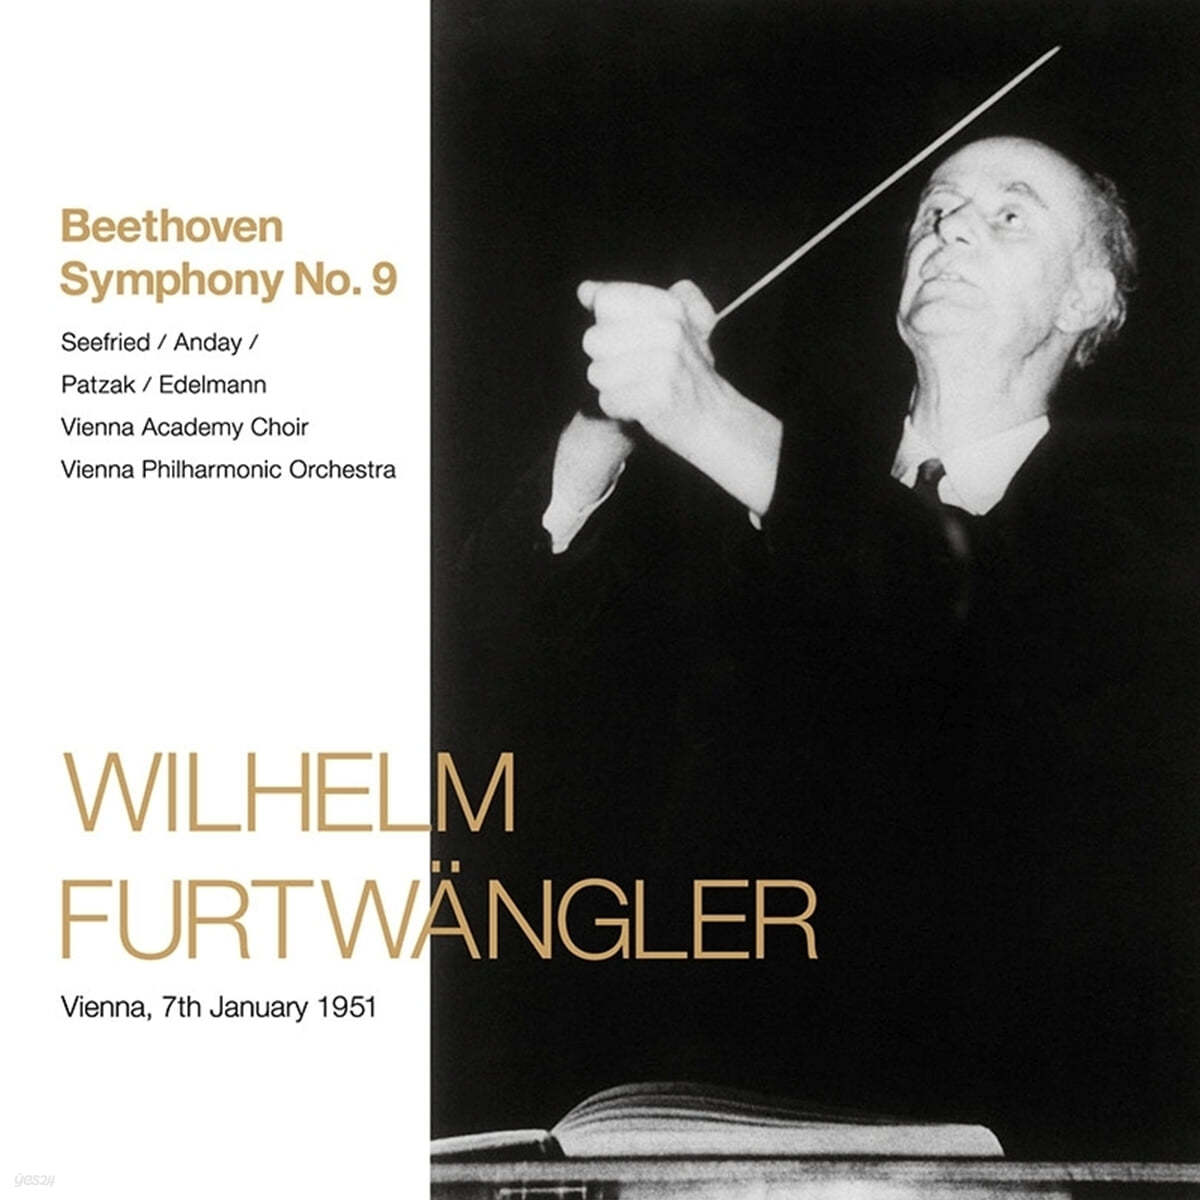 Wilhelm Furtwangler 베토벤: 교향곡 9번 - 빌헬름 푸르트벵글러 (Beethoven: Symphony No.9)